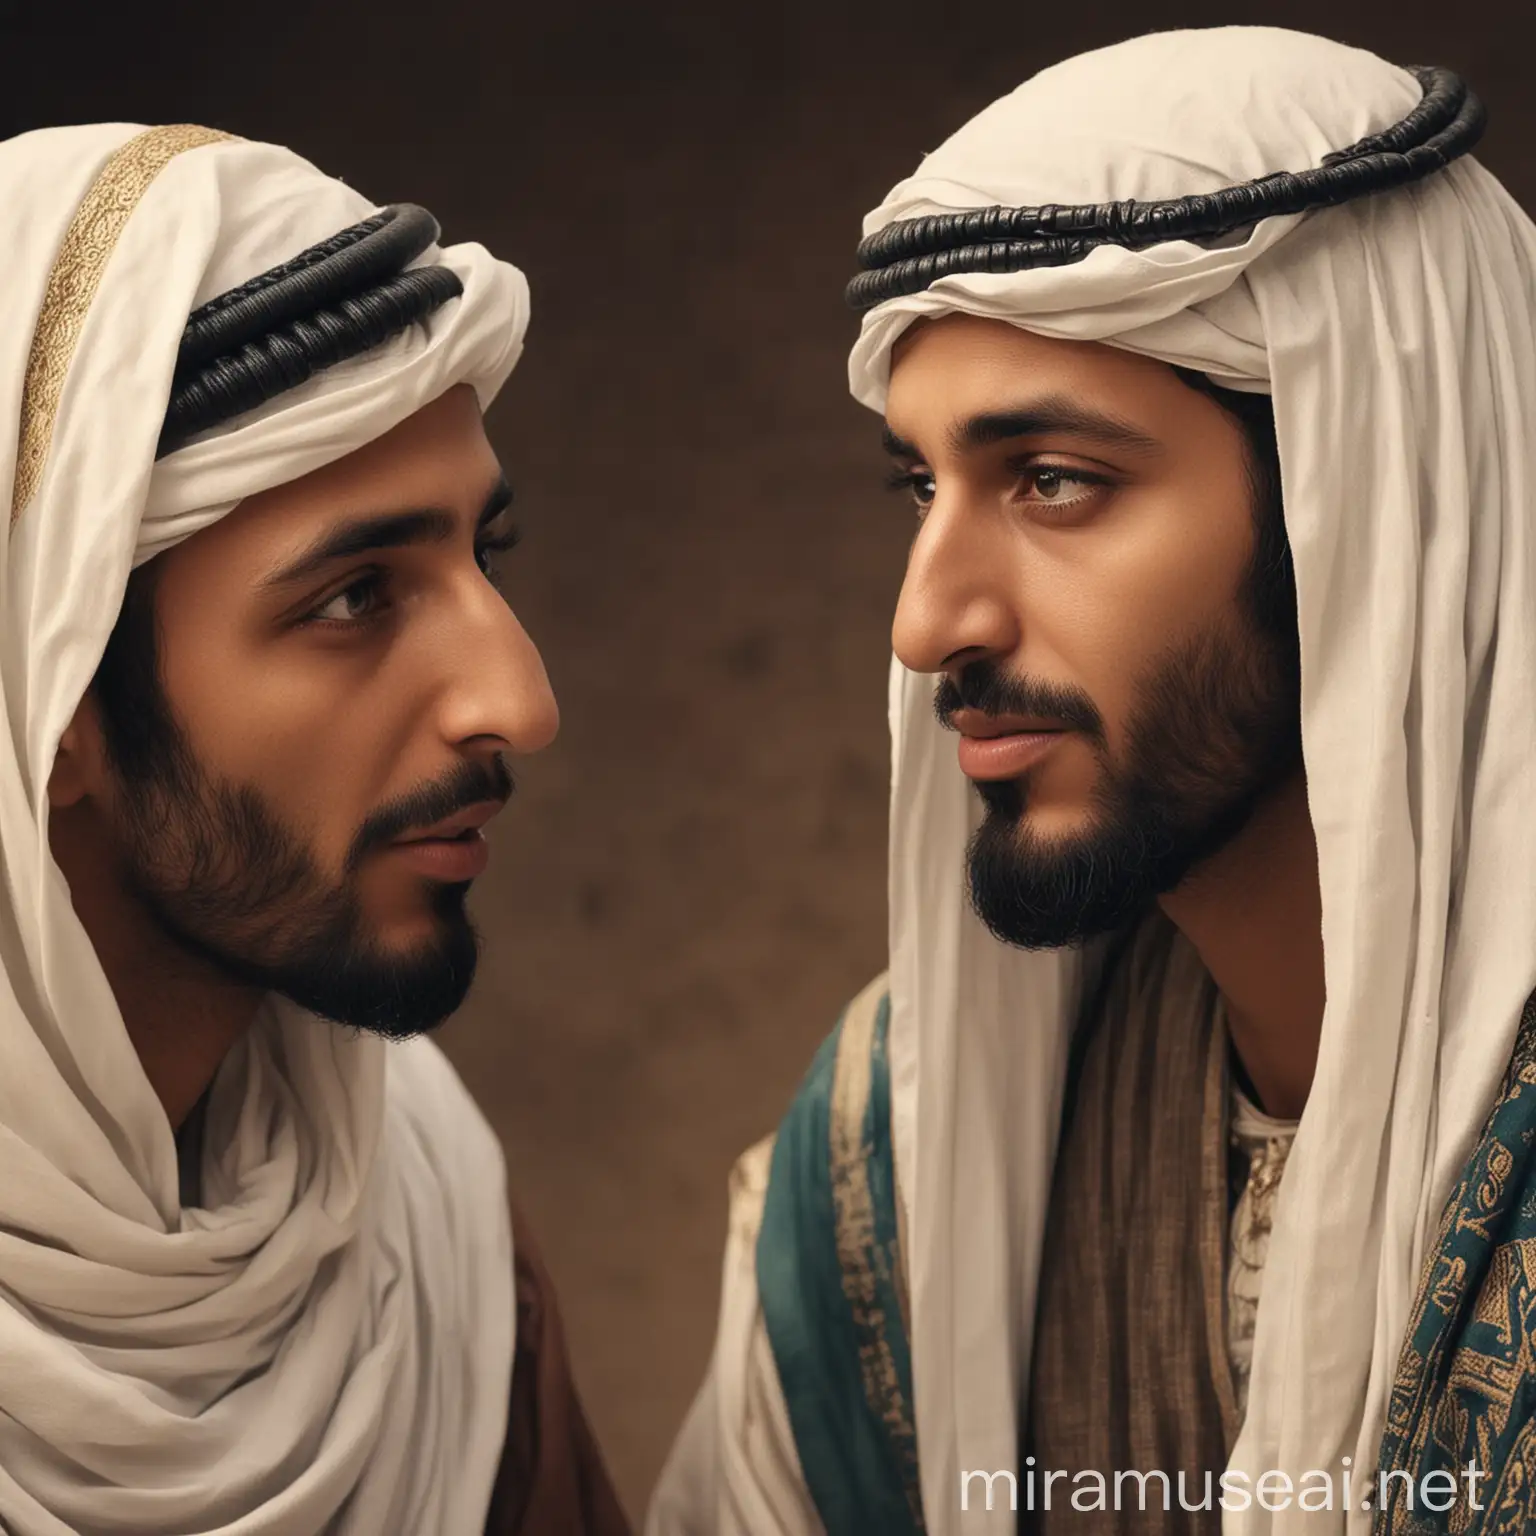 Arabian Men Conversing Secretly in 600AD